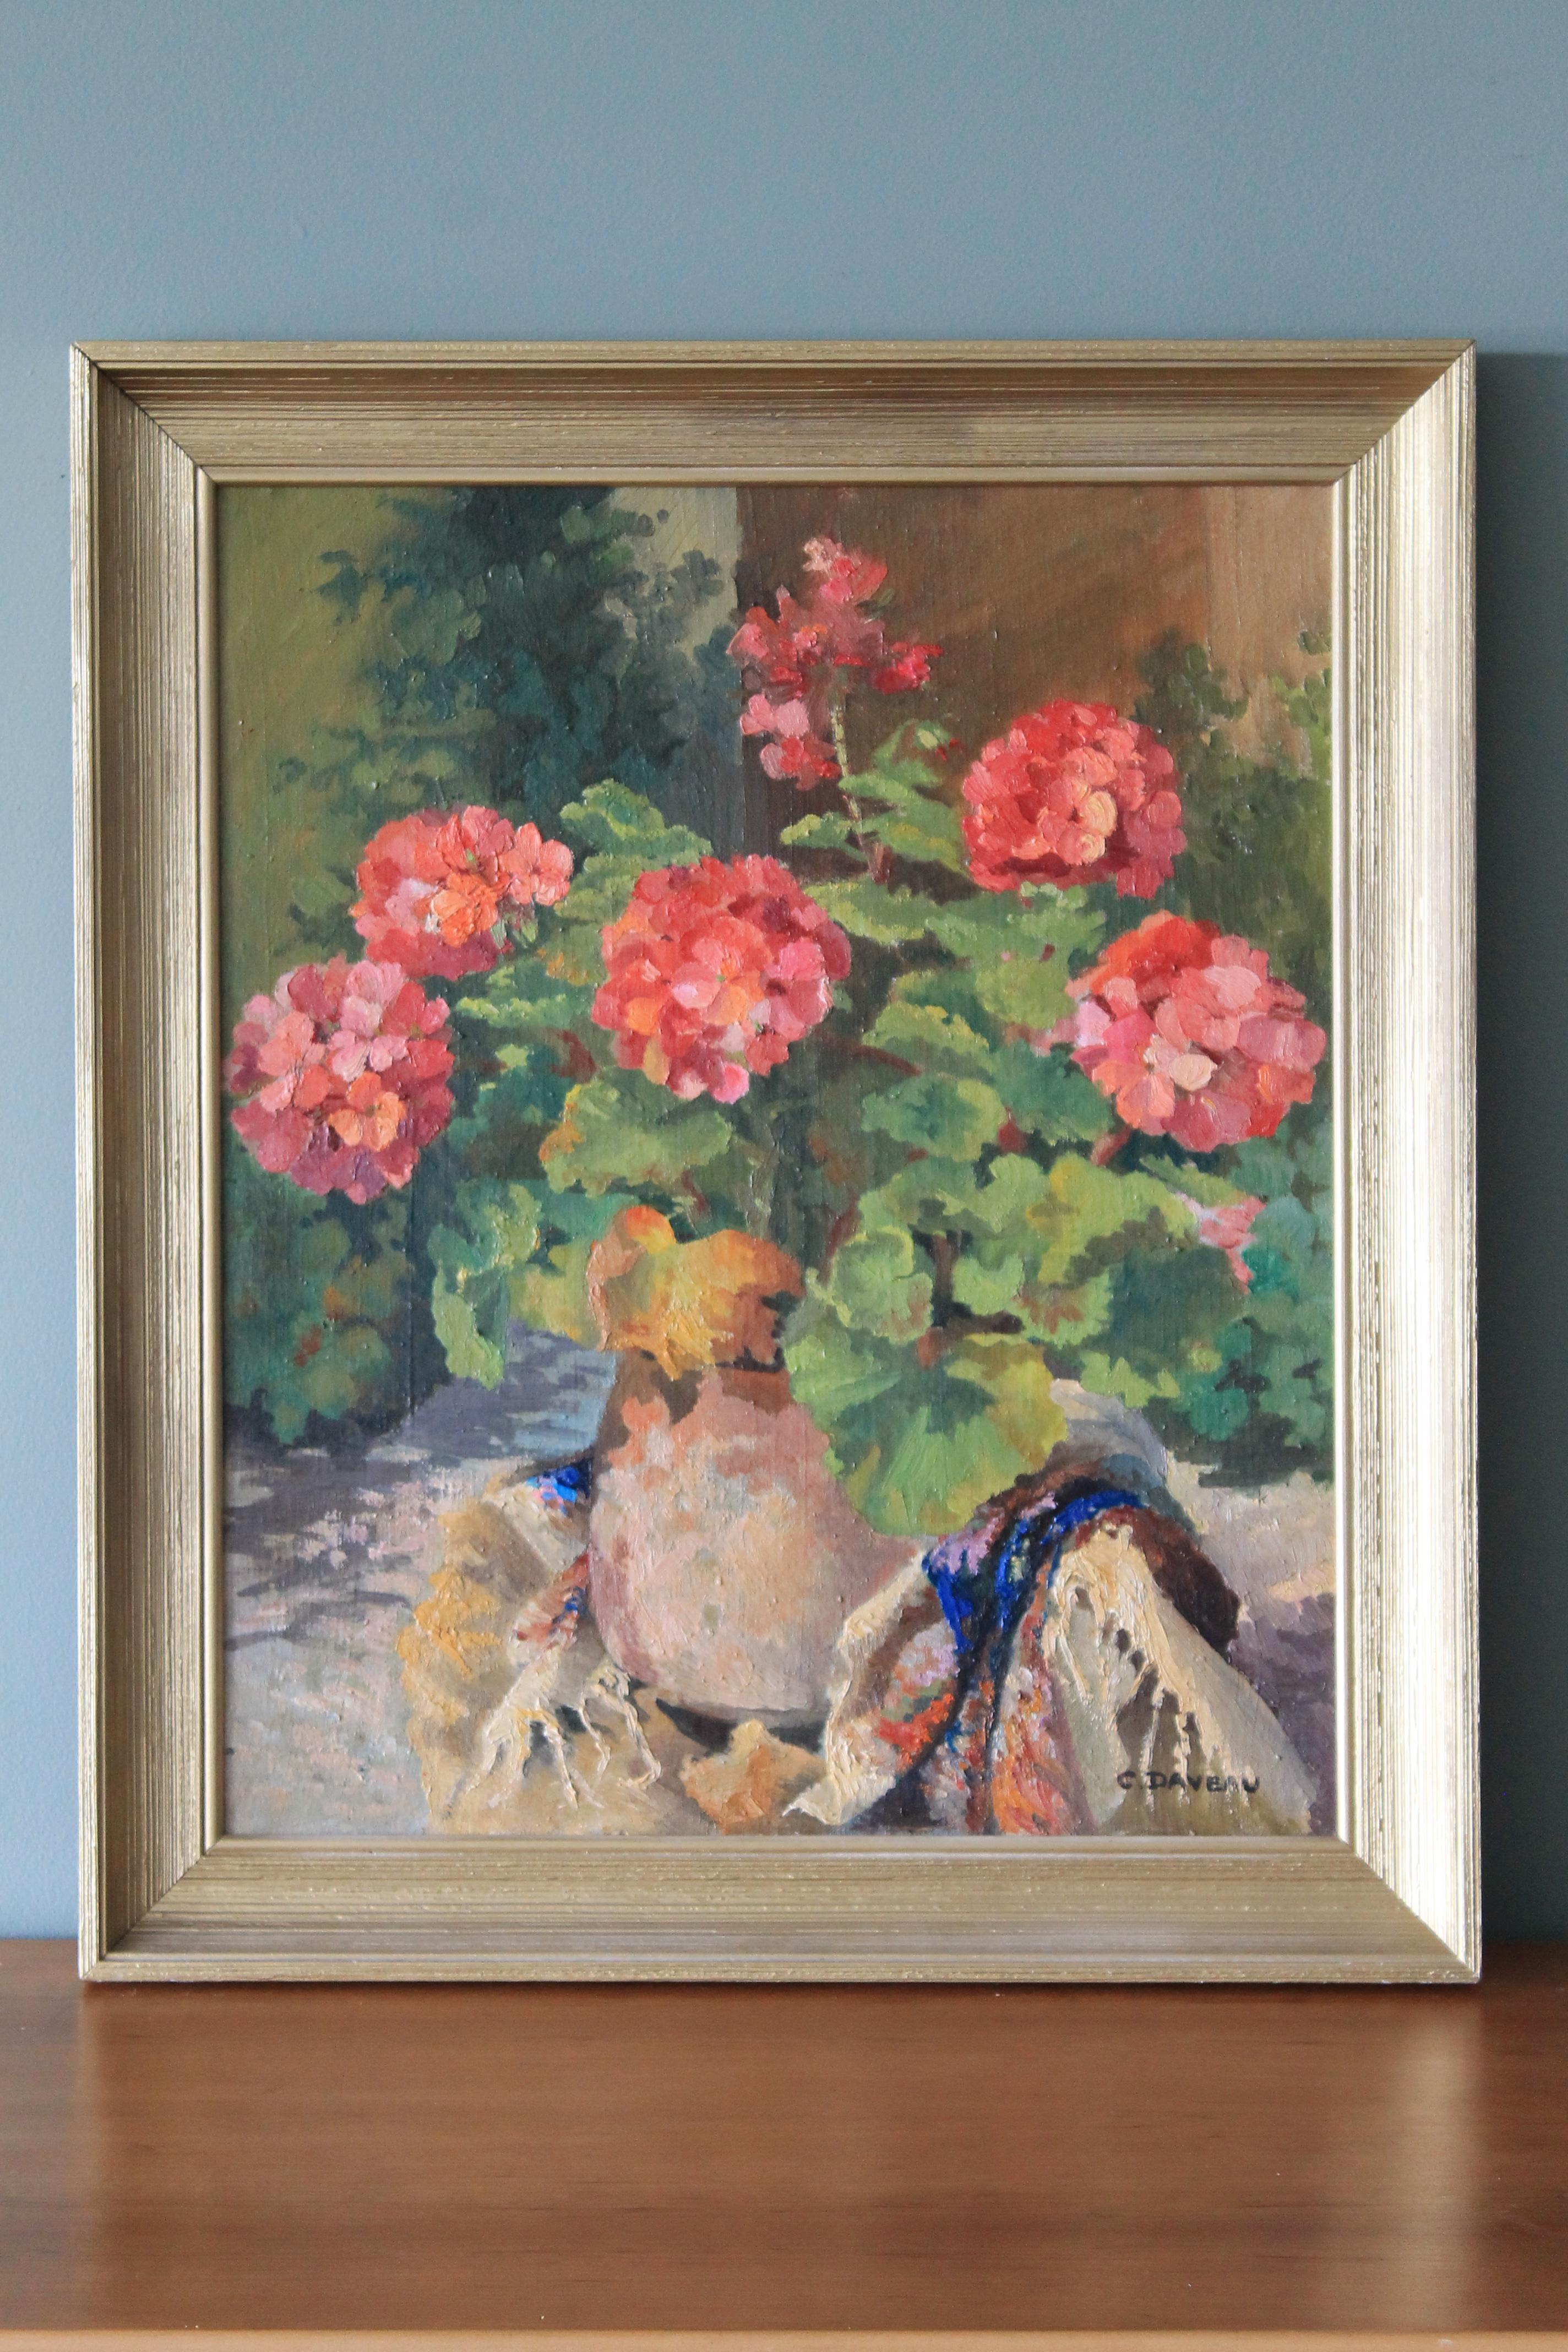 Vintage geranium oil painting, floral still life, flowers - Painting by c. daveau